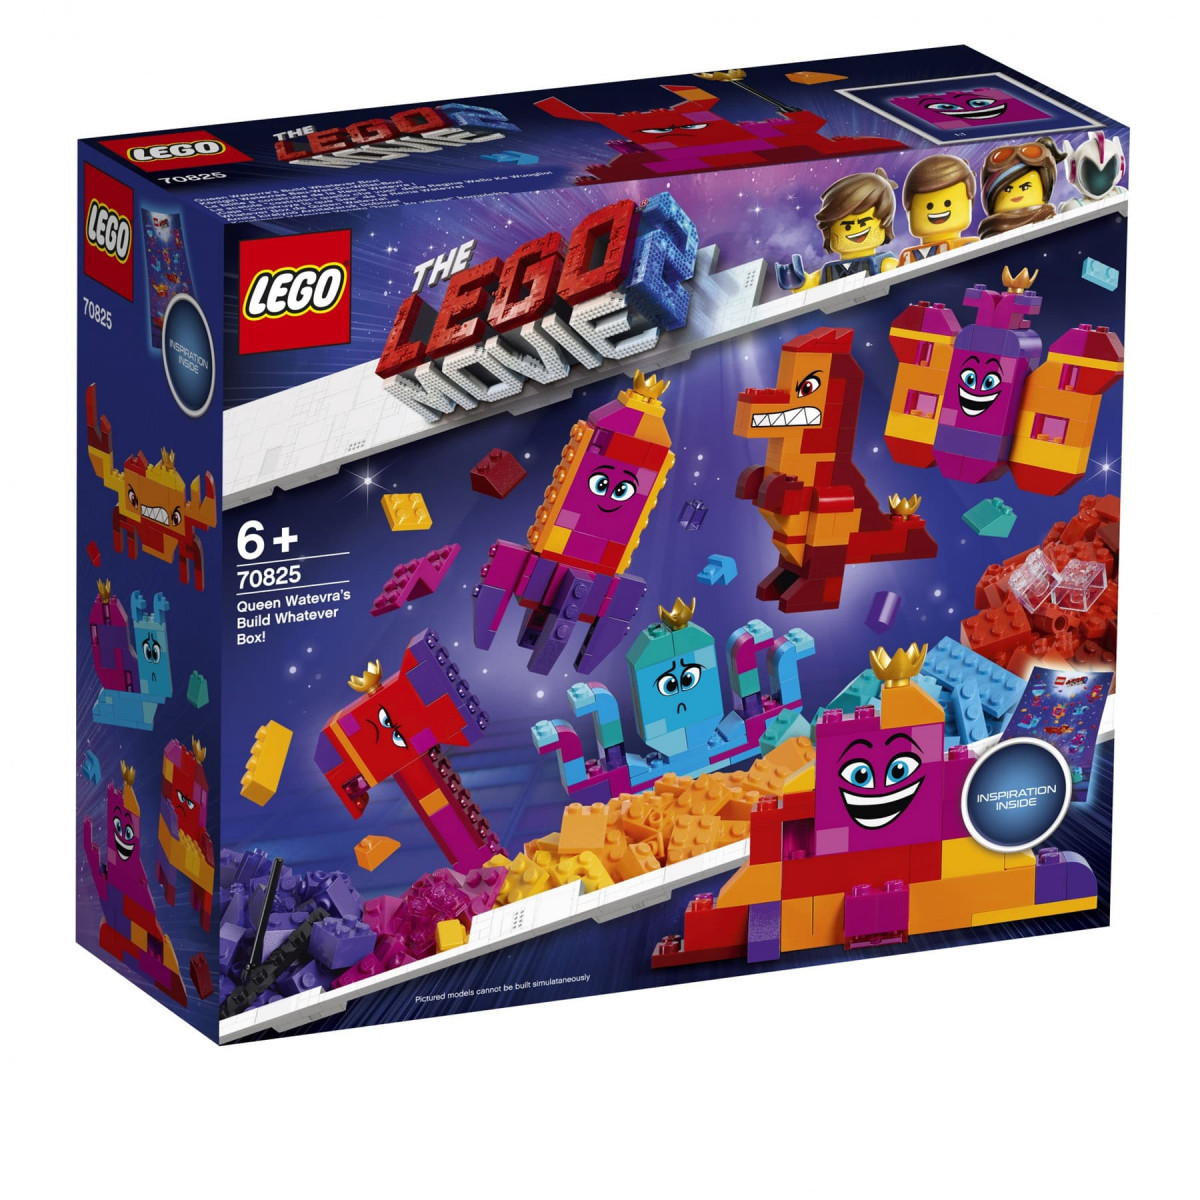 LEGO MOVIE 2 Queen Watevra's Build Whatever Box! - 70825